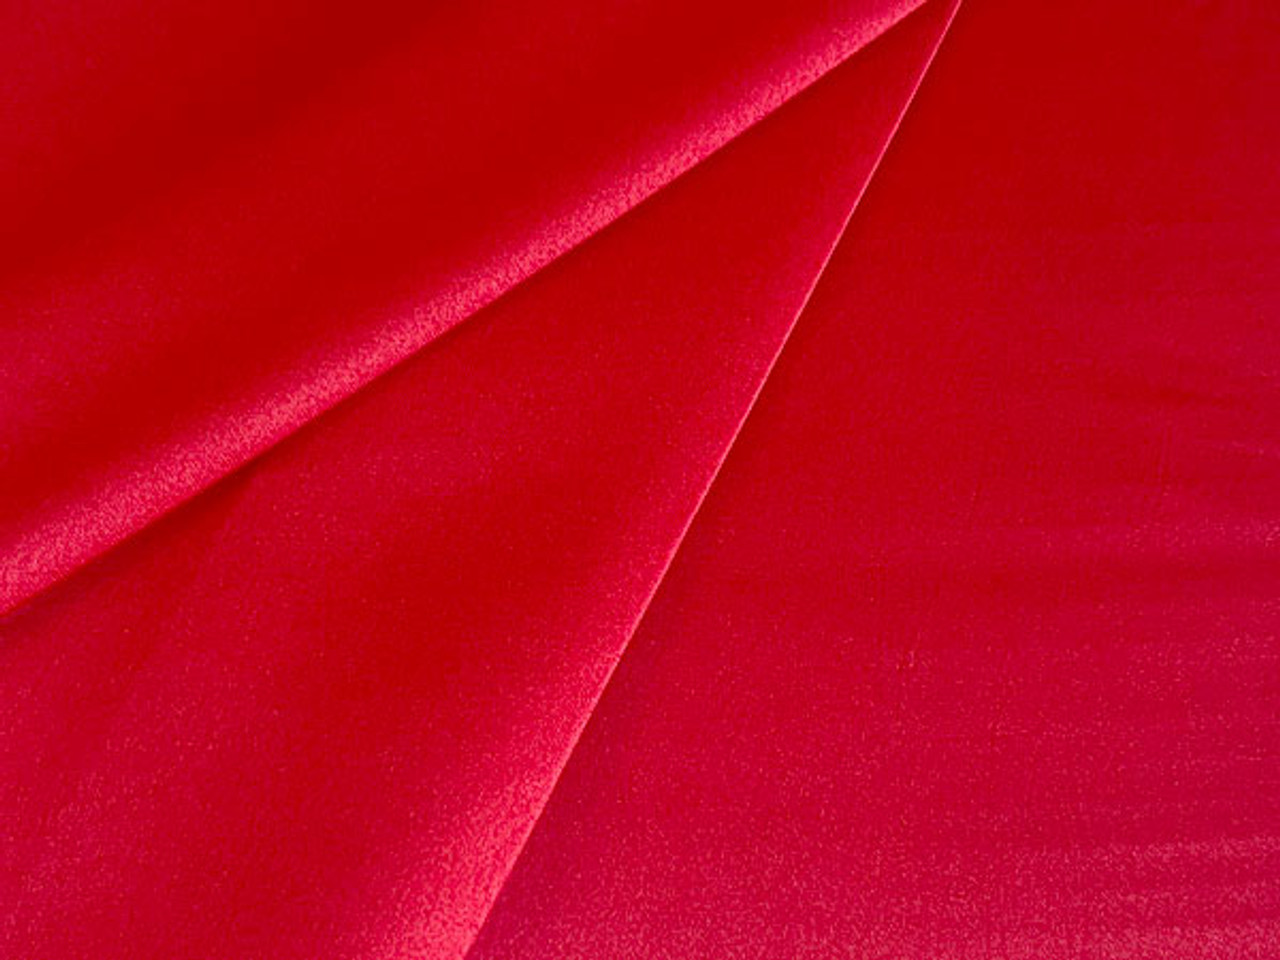 Bridal Satin Red - fabric fabric